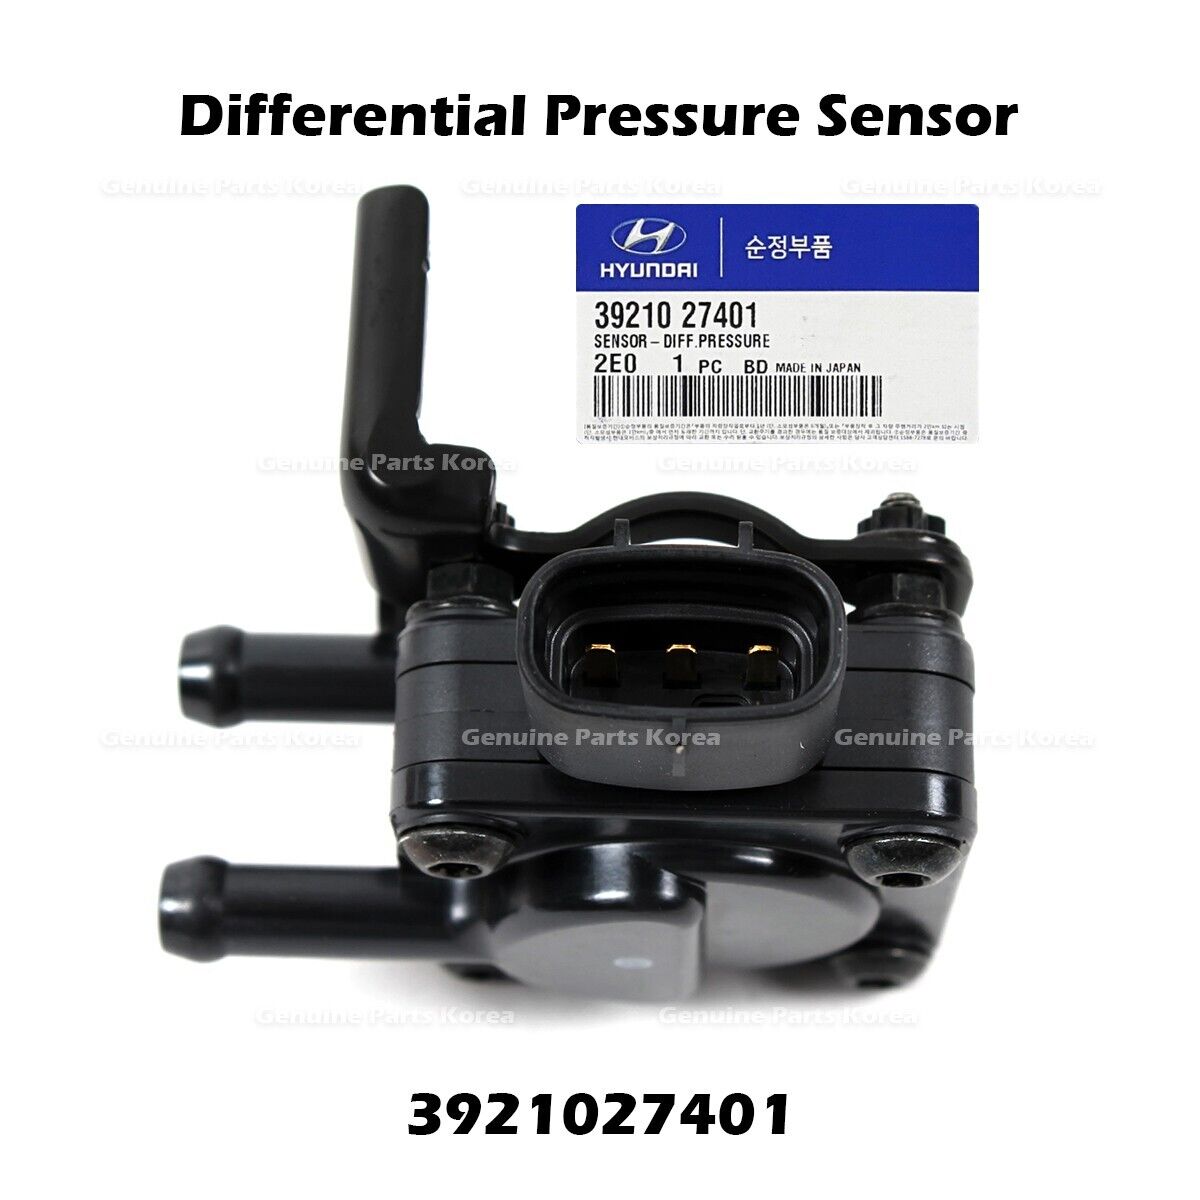 ⭐Genuine⭐ Differential Pressure Sensor 3921027401 for Hyundai Tuscon Kia Carens